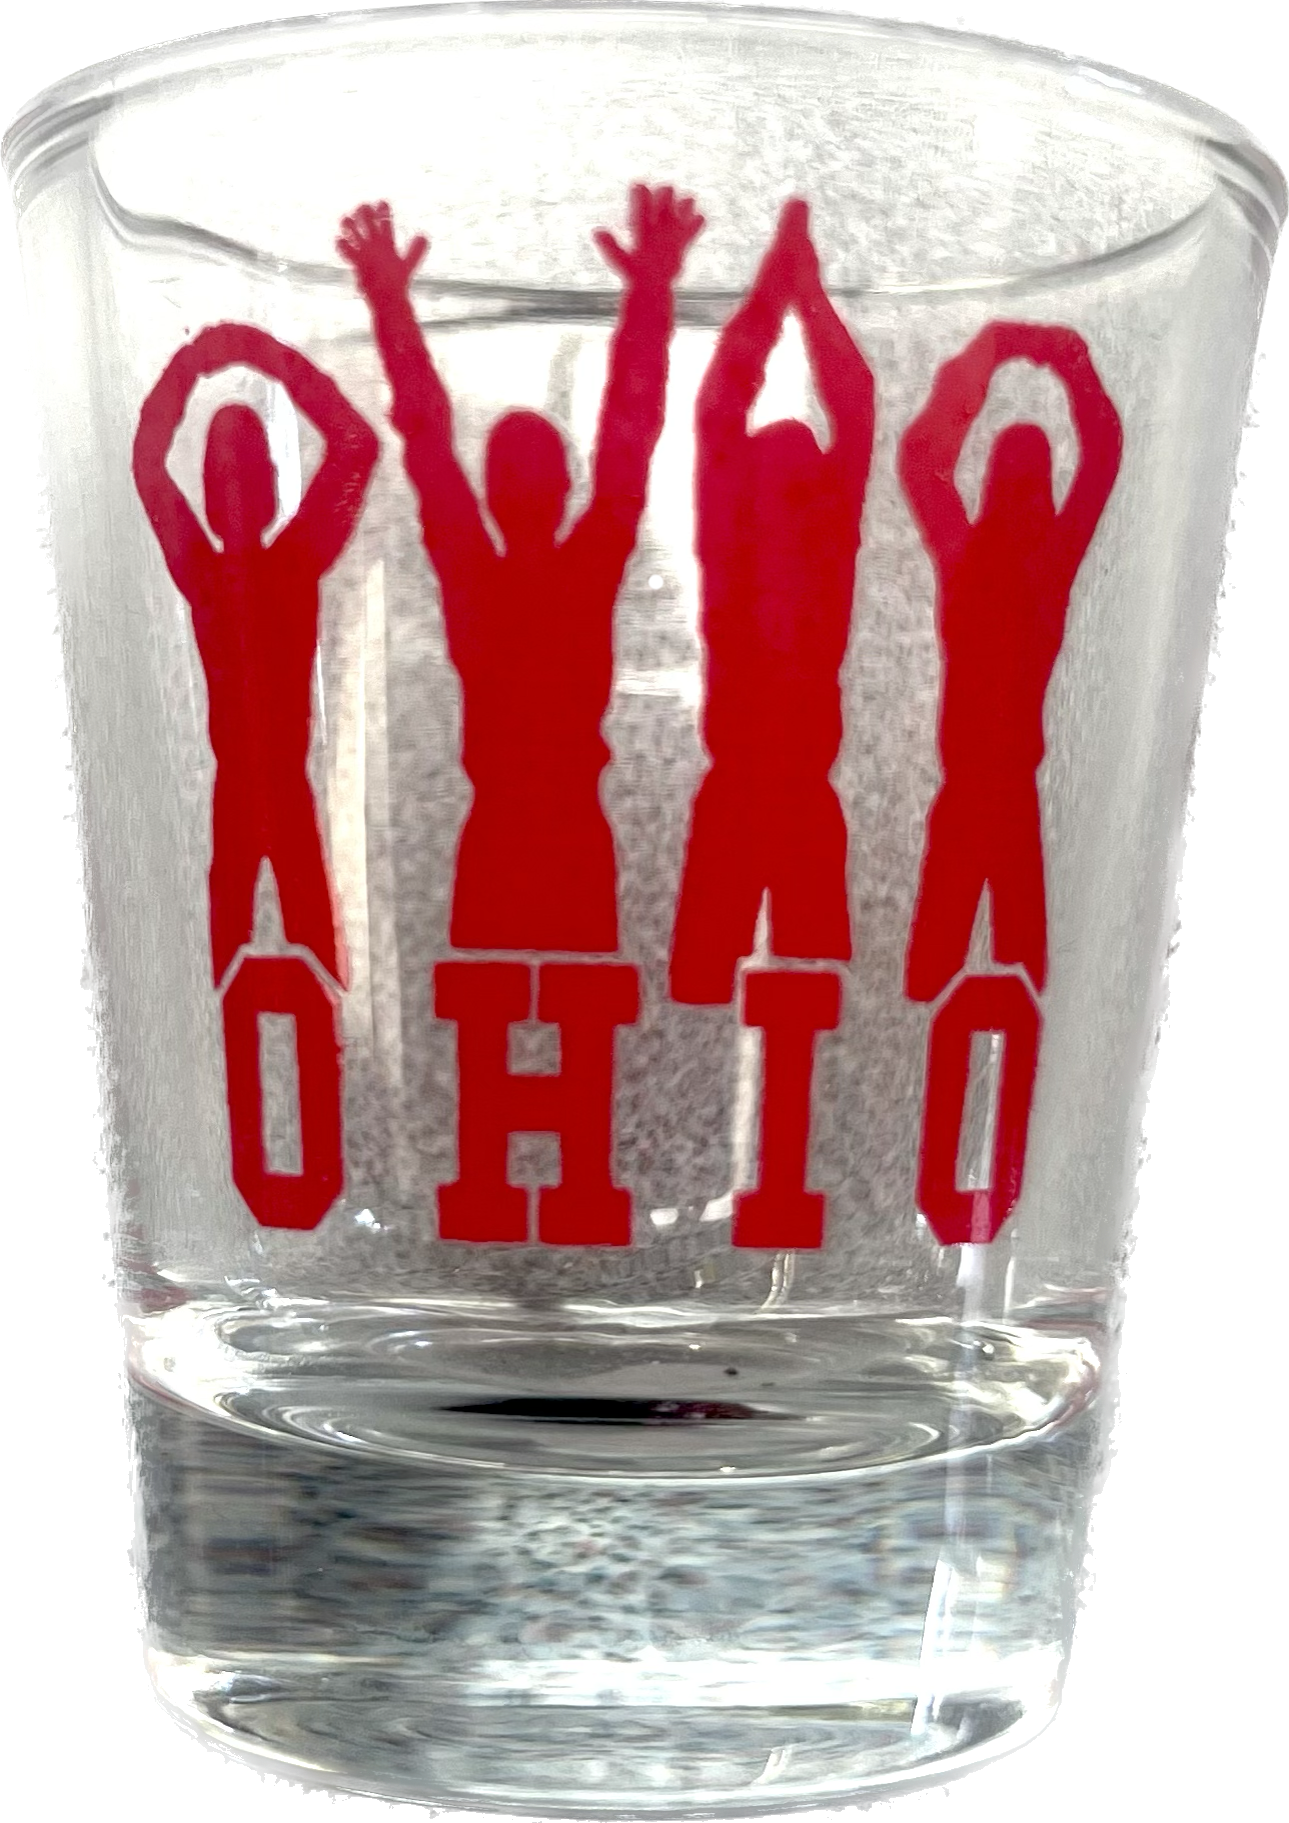 OHIO shot glass